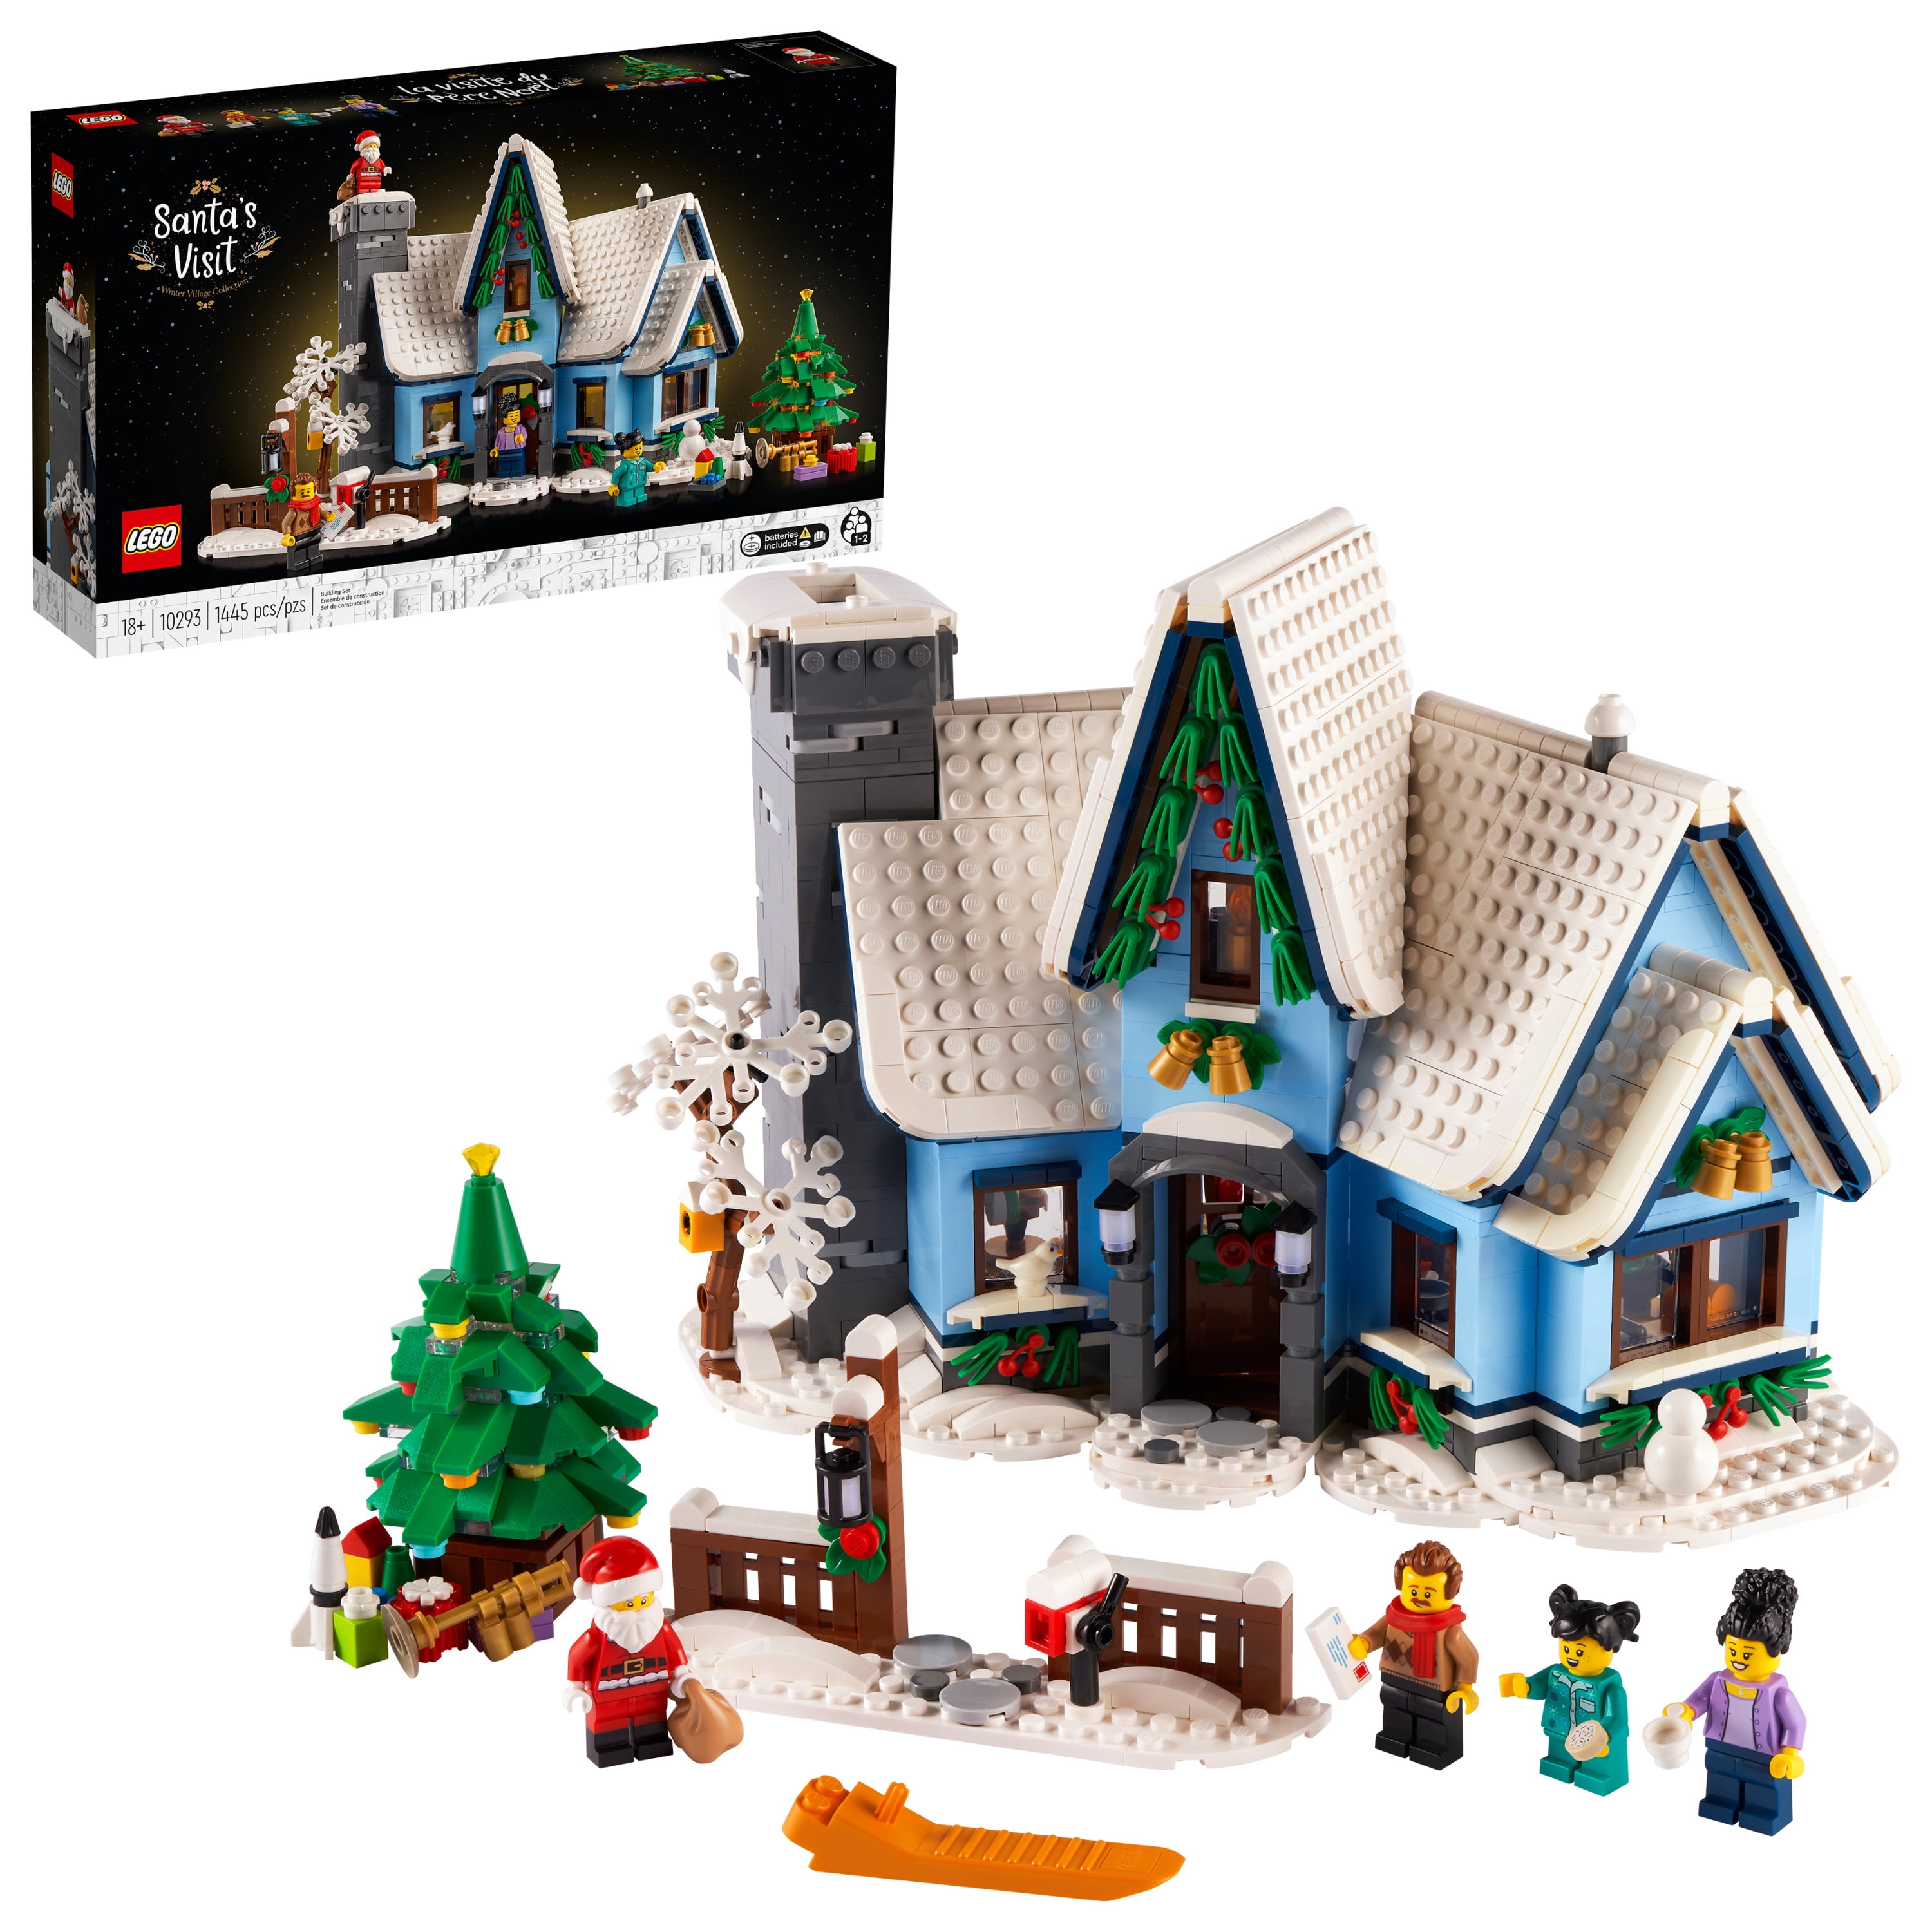 LEGO Santa’s Visit Building Set for Adults 18